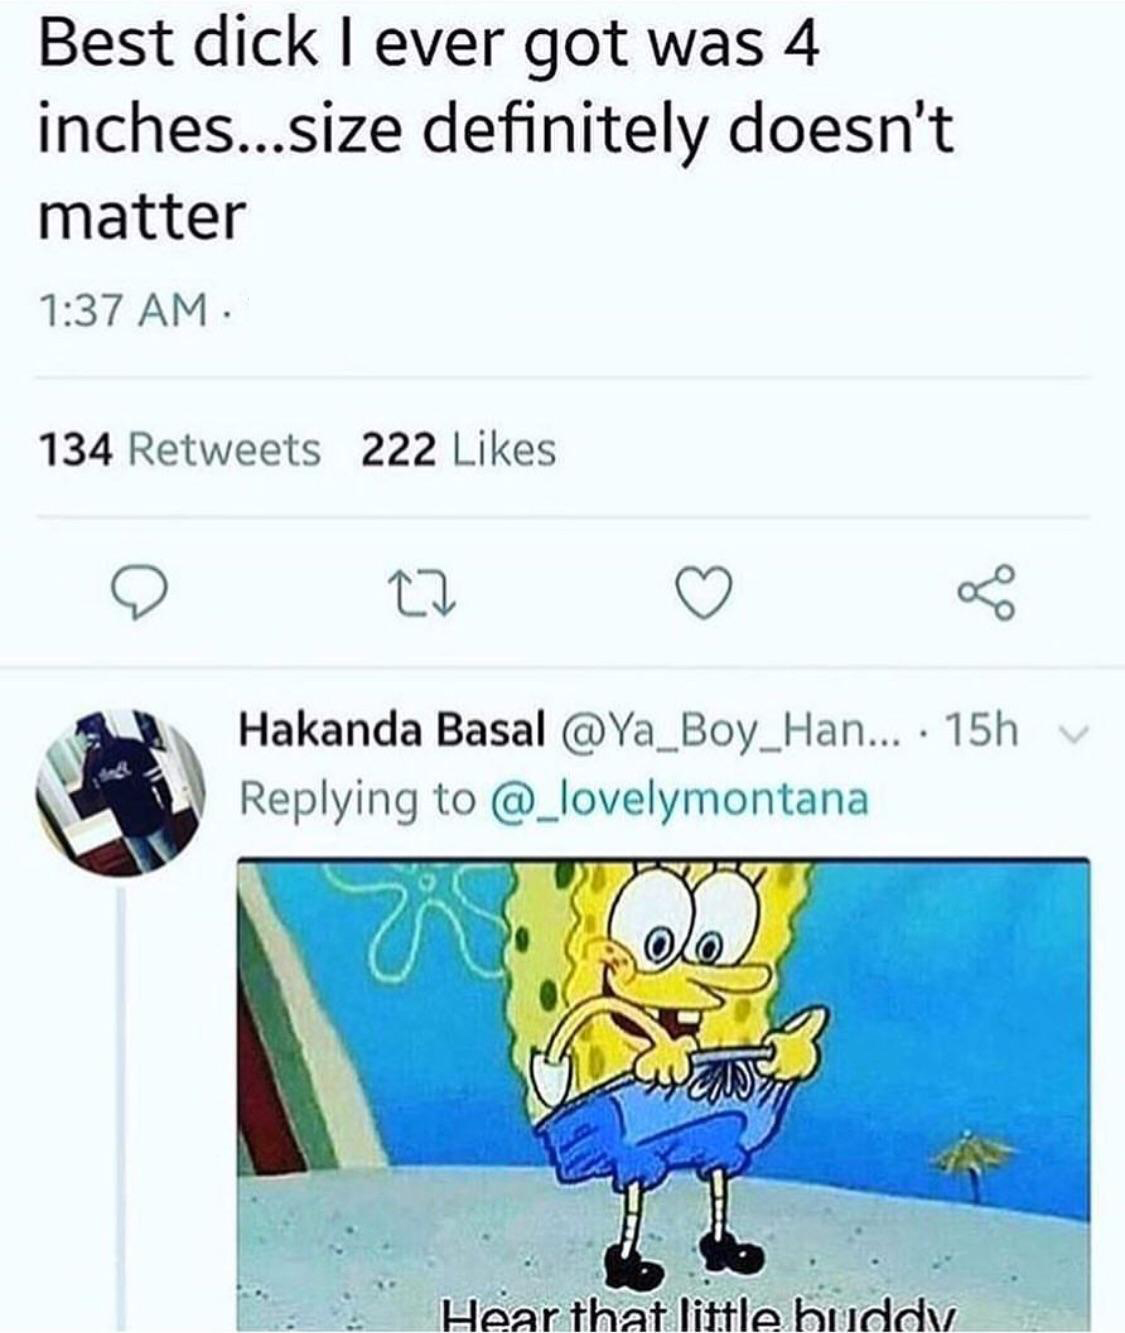 9 inch dick